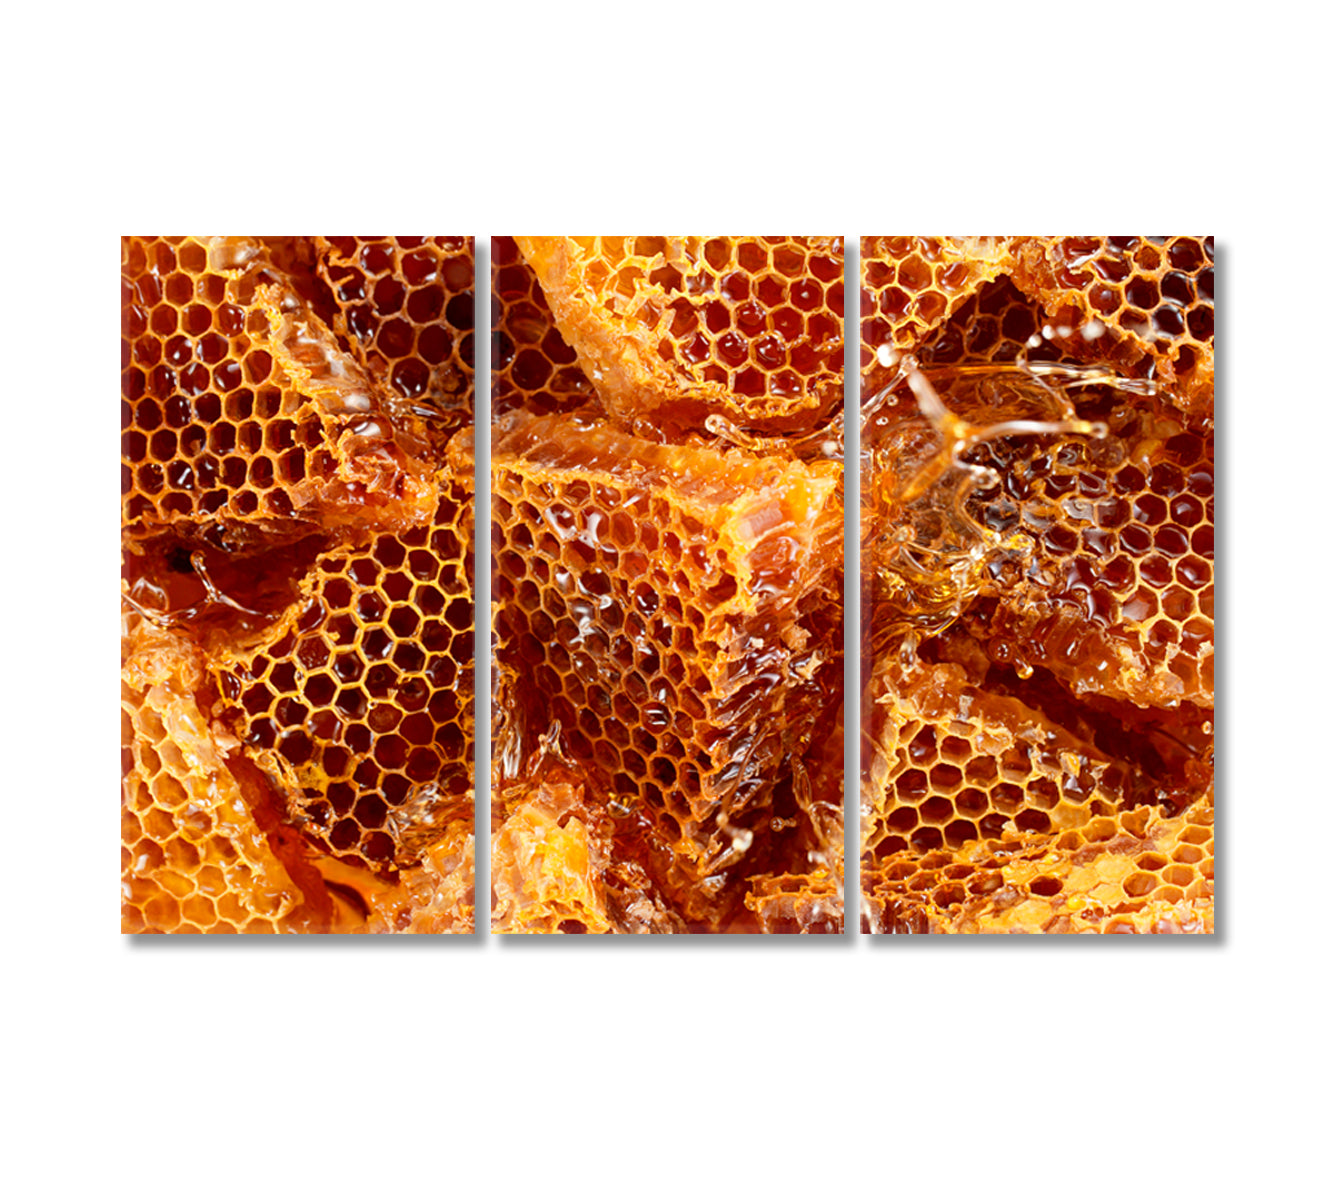 Honeycombs with Honey Canvas Print-Canvas Print-CetArt-3 Panels-36x24 inches-CetArt